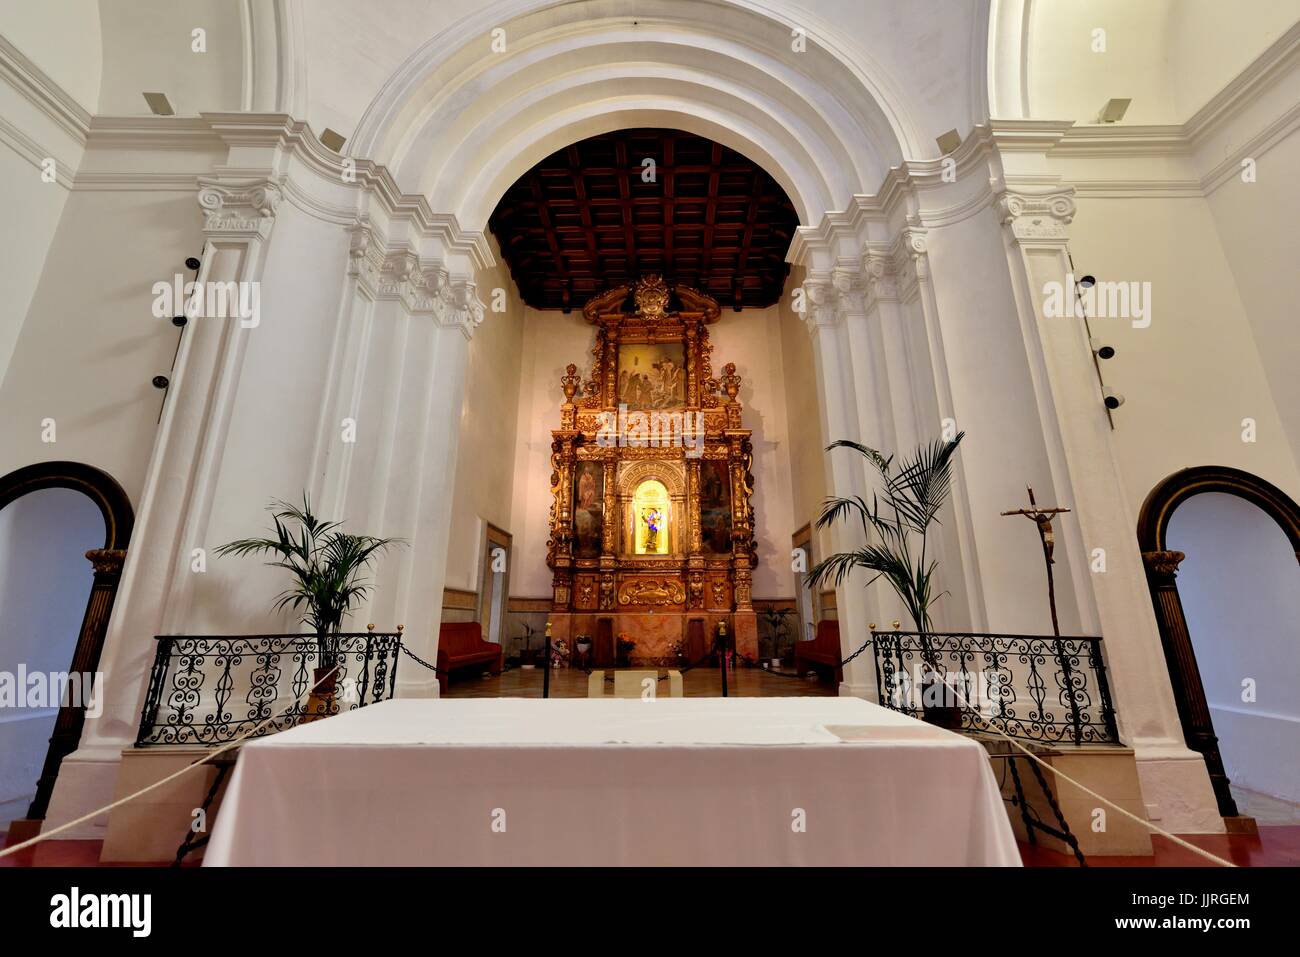 Santuario de la Virgen del Toro interior fotos de la iglesia en la cima del monte Toro menorca españa Foto de stock